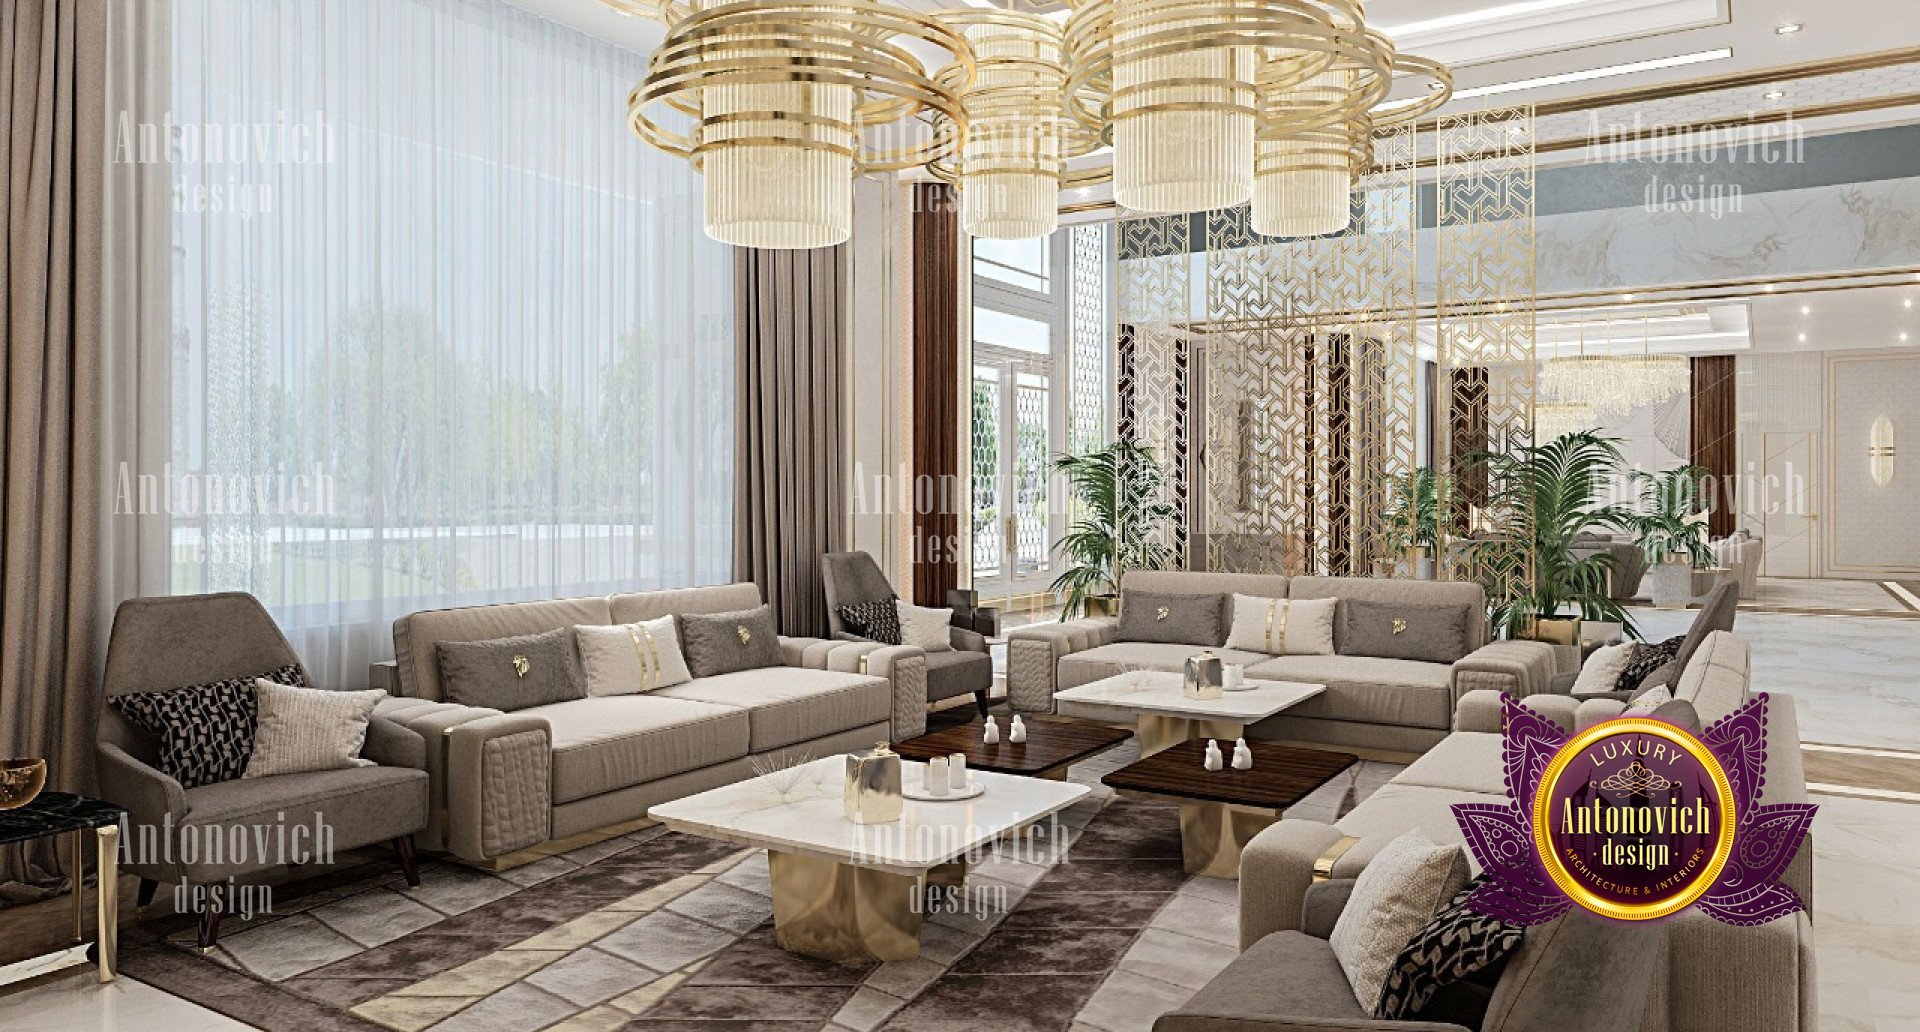 Comfortable Living Room Design Idea